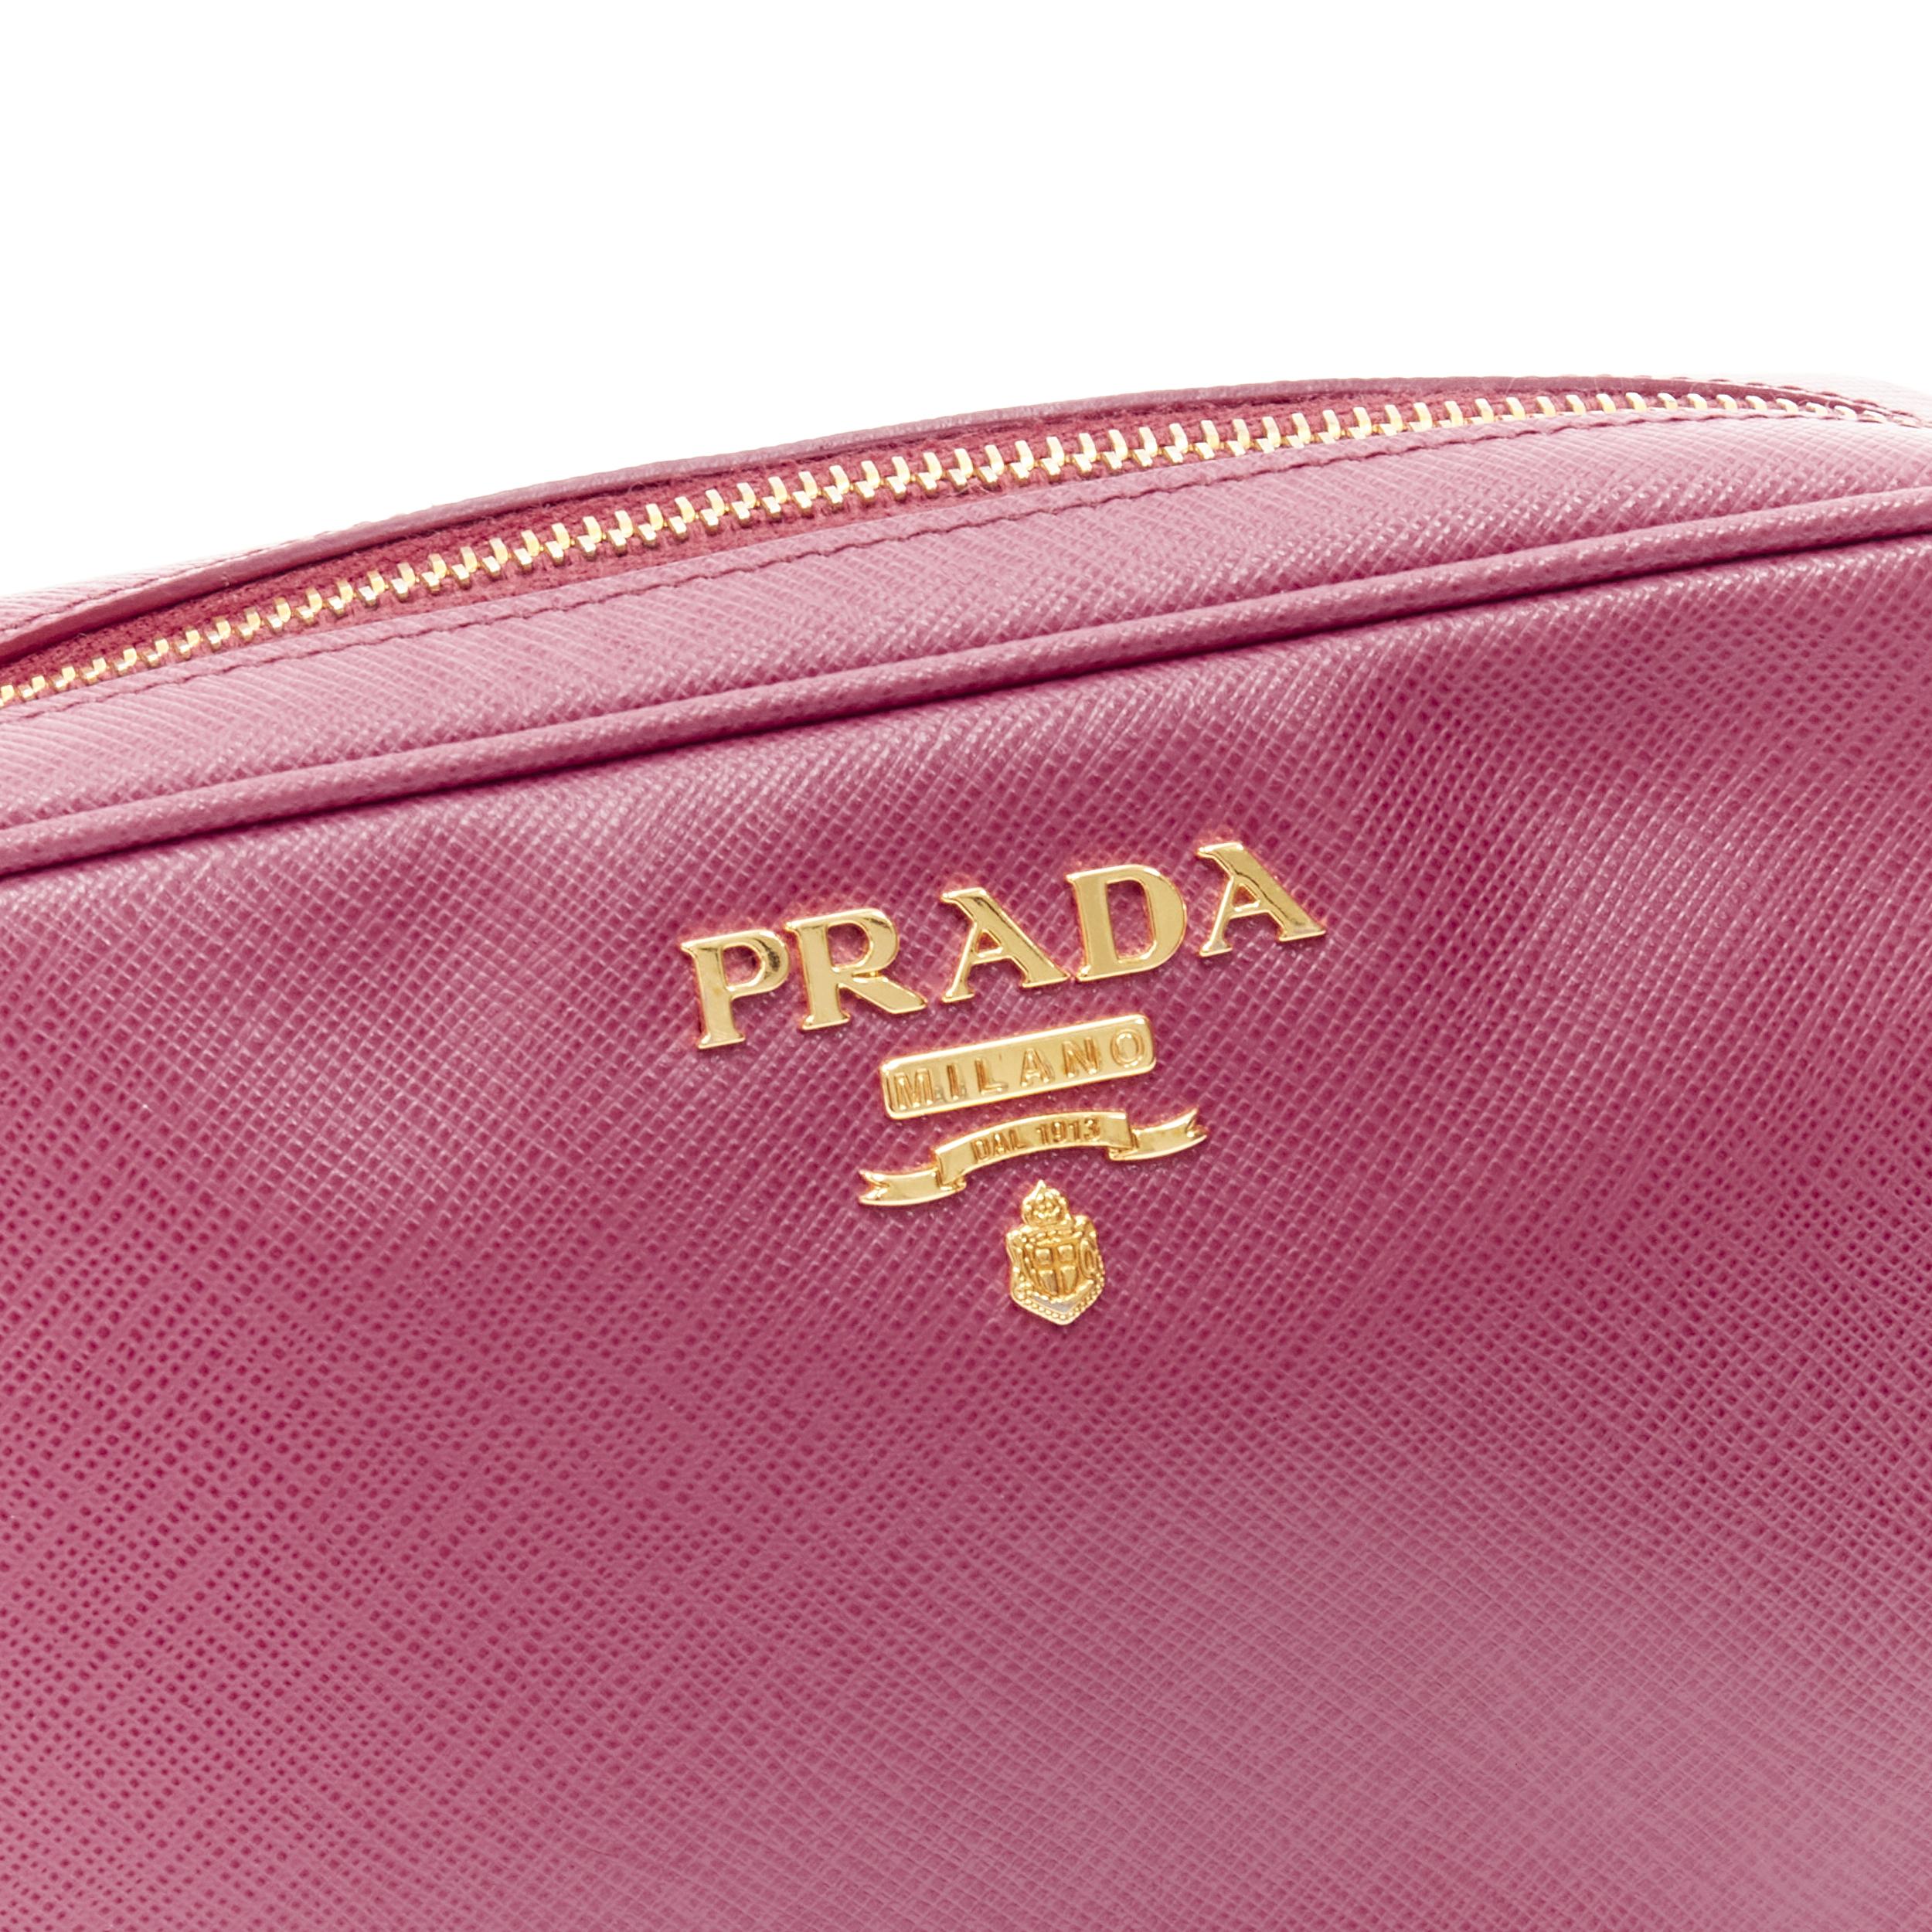 Pink PRADA Bandoliera Bruyere pink saffiano leather gold logo crossbody camera bag